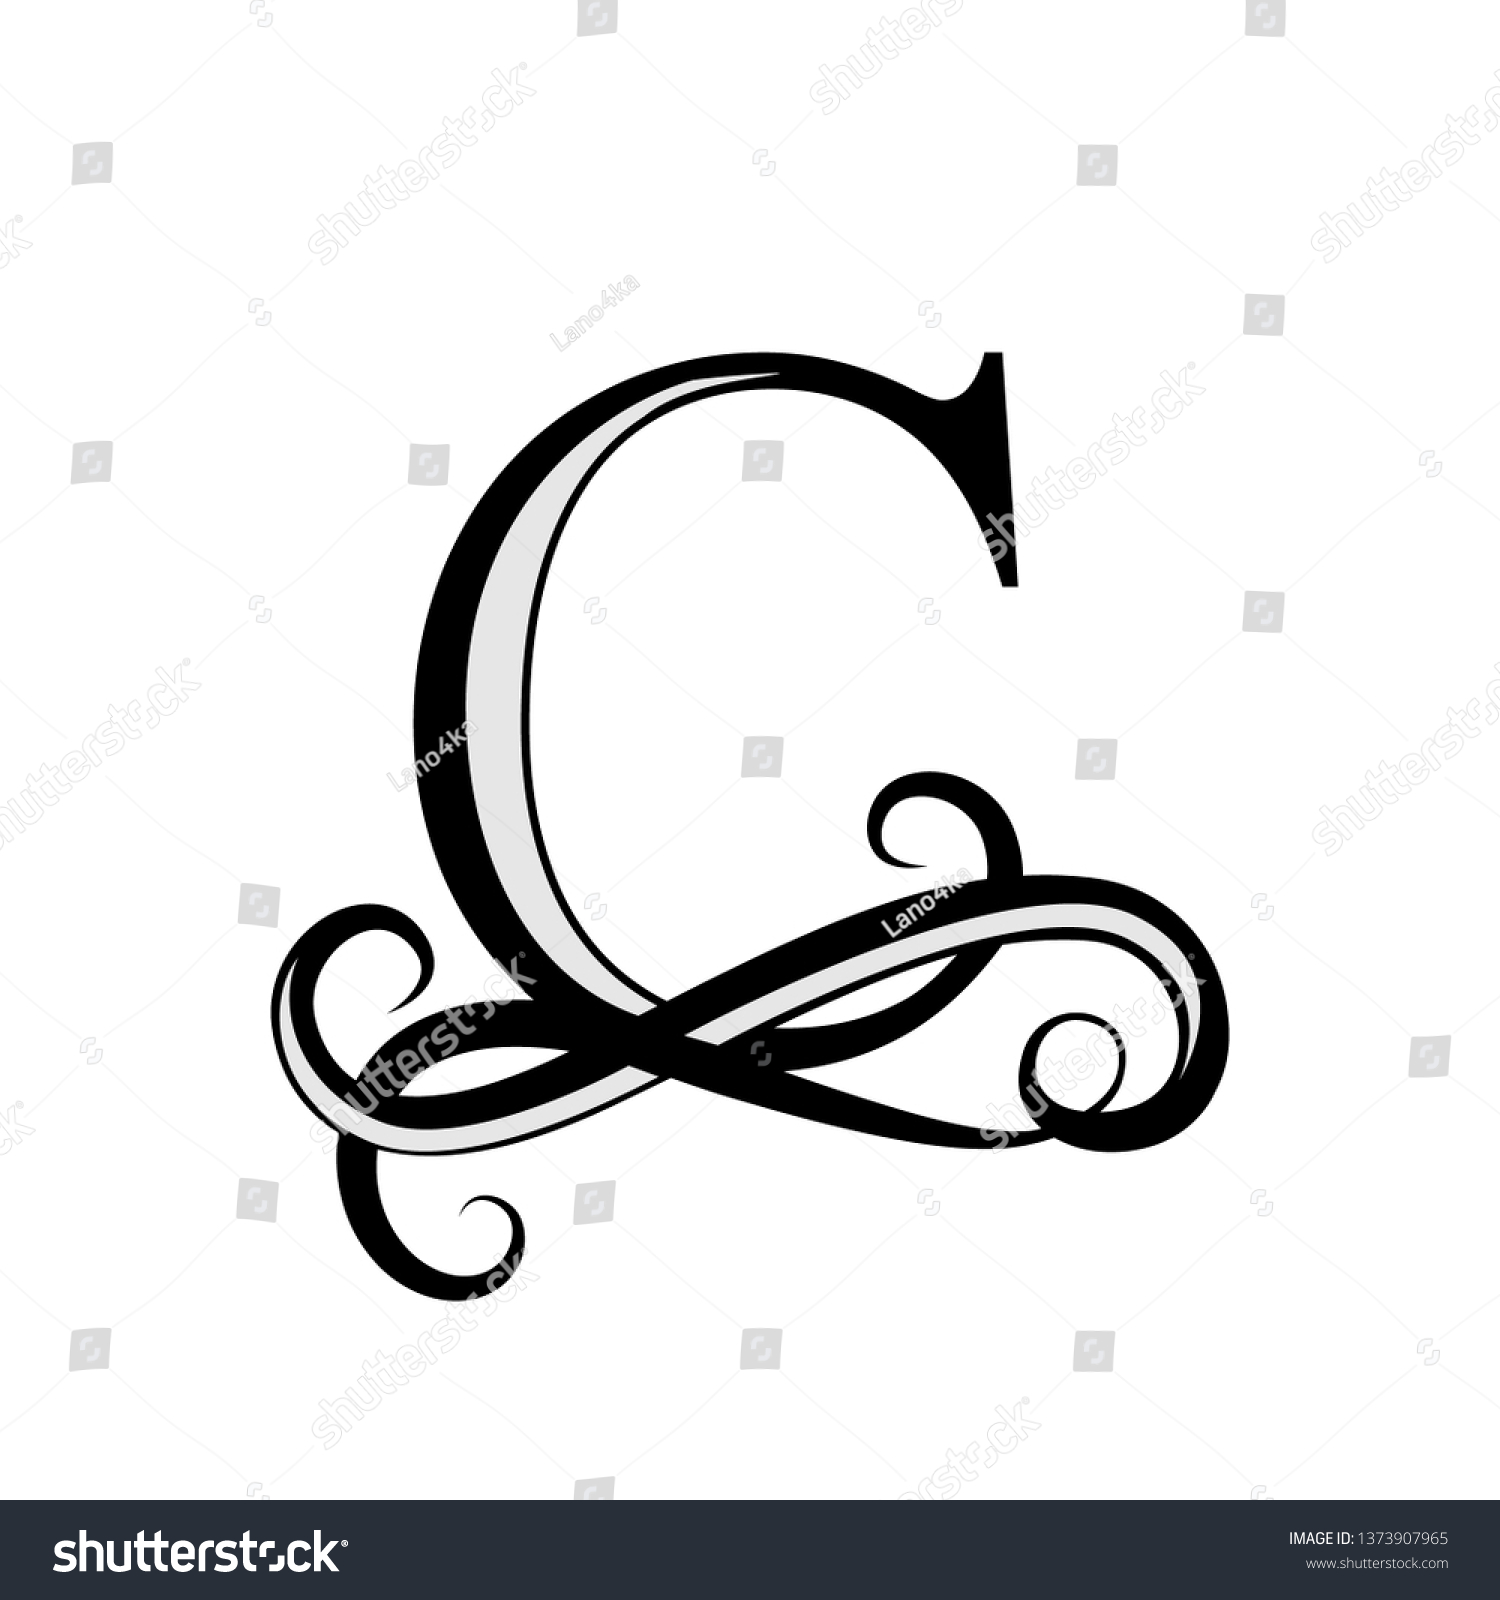 Capital Letter Monograms Logos Beautiful Letter Stock Illustration ...